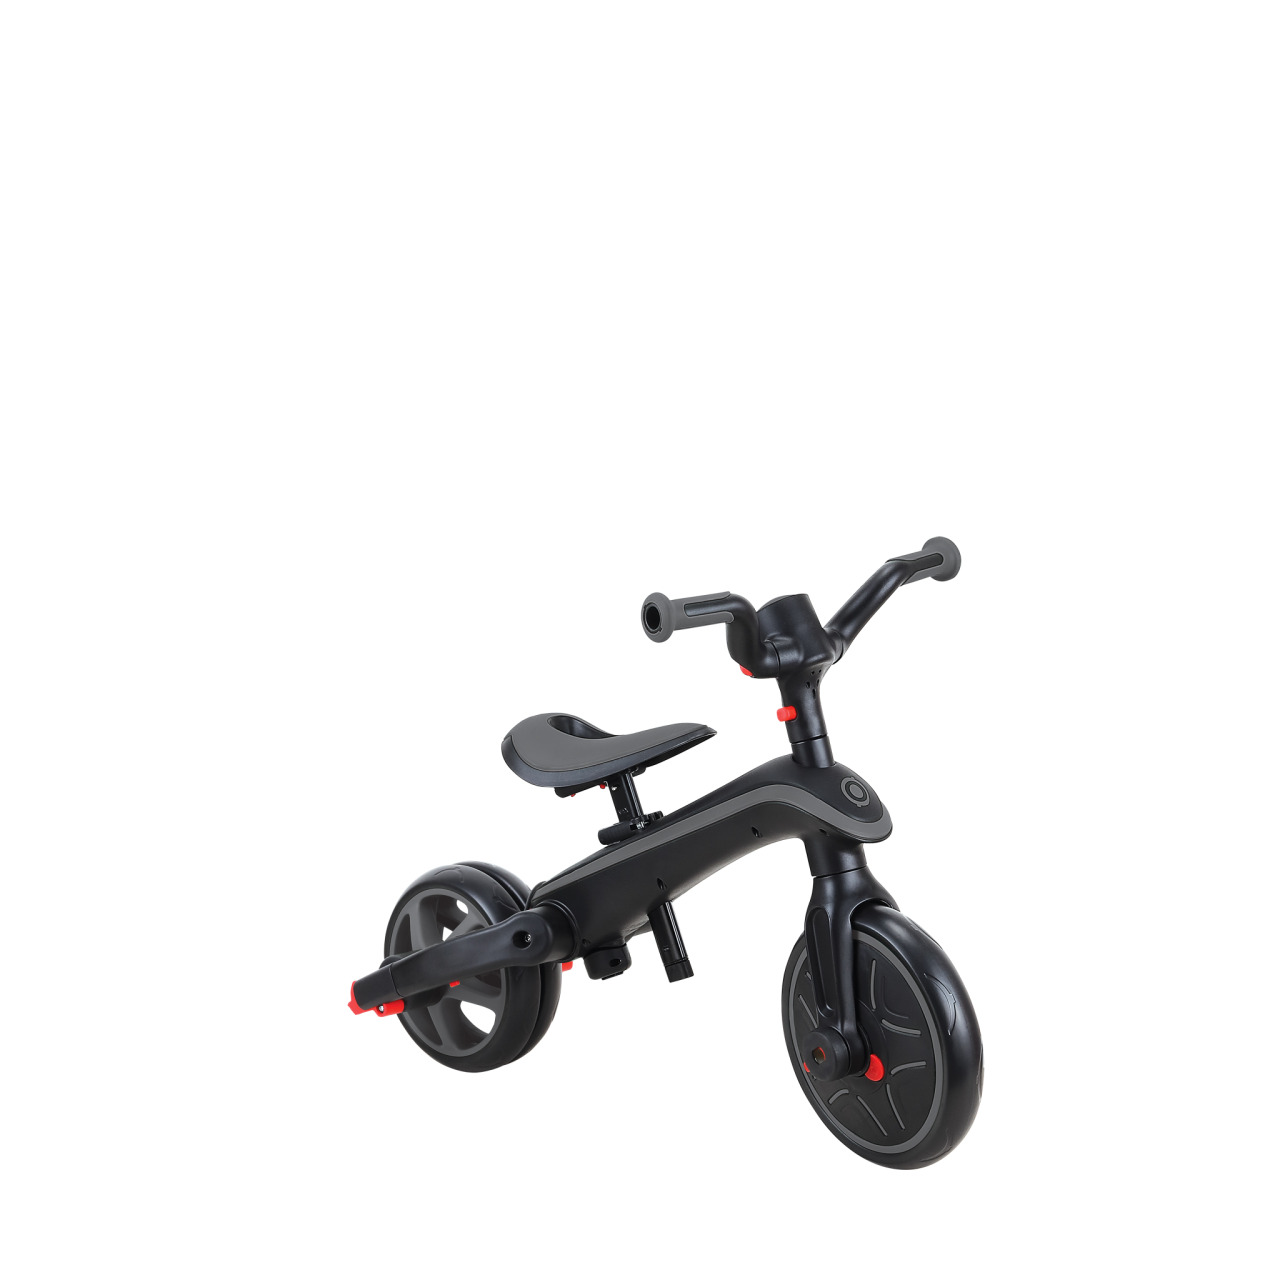 732 120 Foldable Tricycle Balance Bike